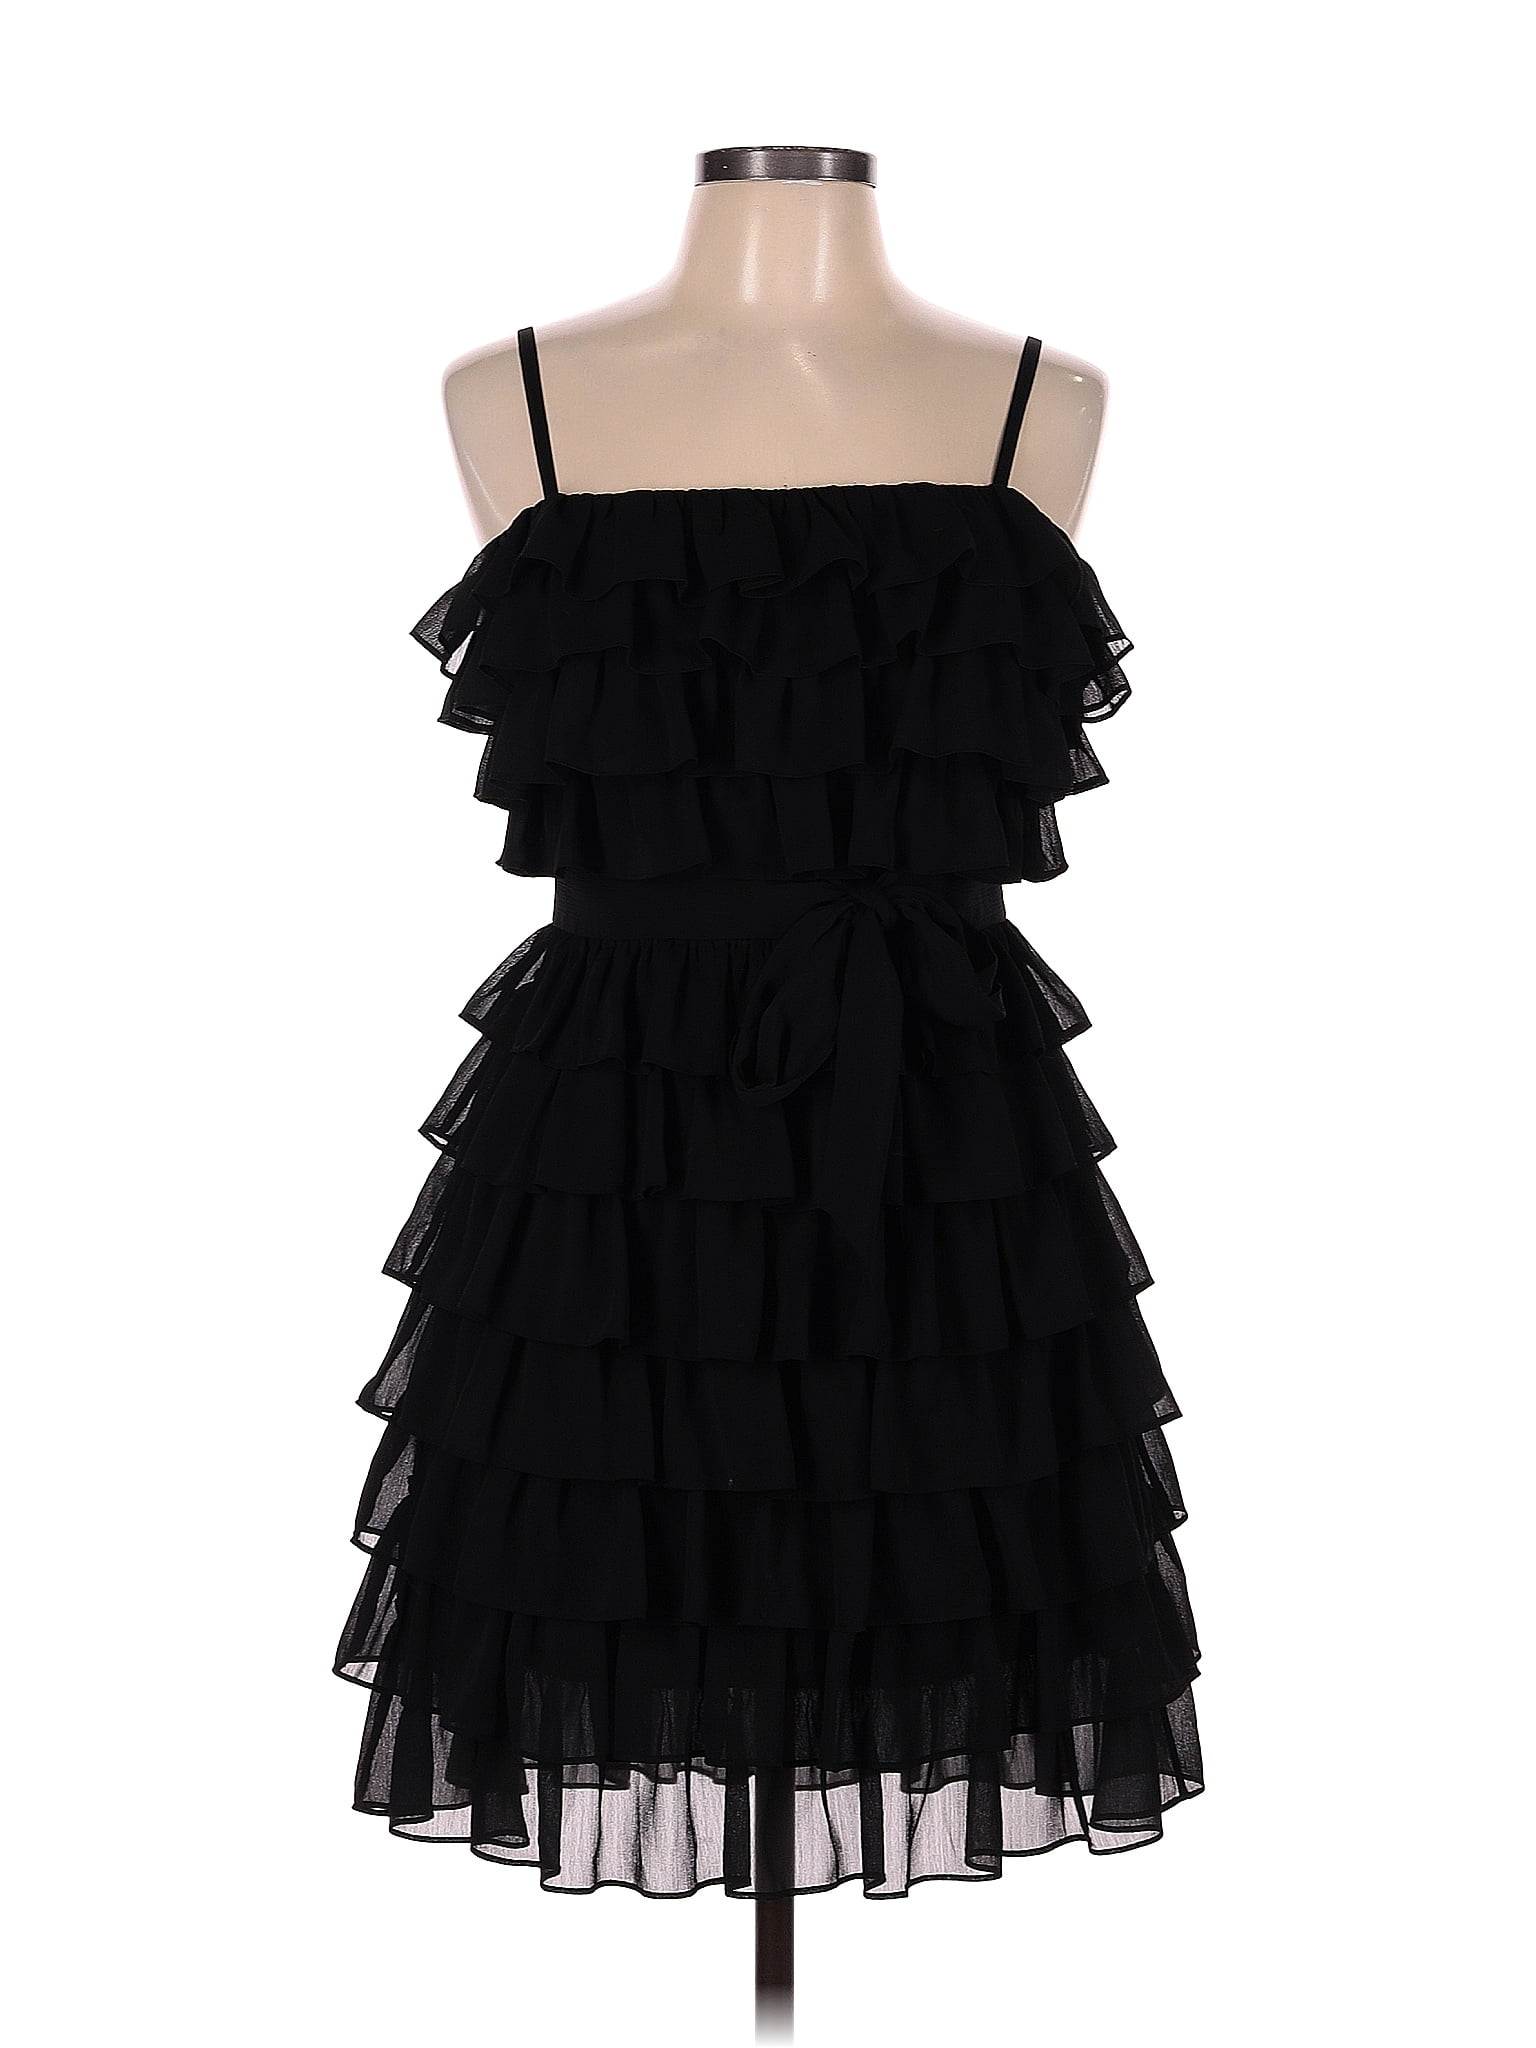 R&K Originals Solid Black Casual Dress Size 14 - 48% off